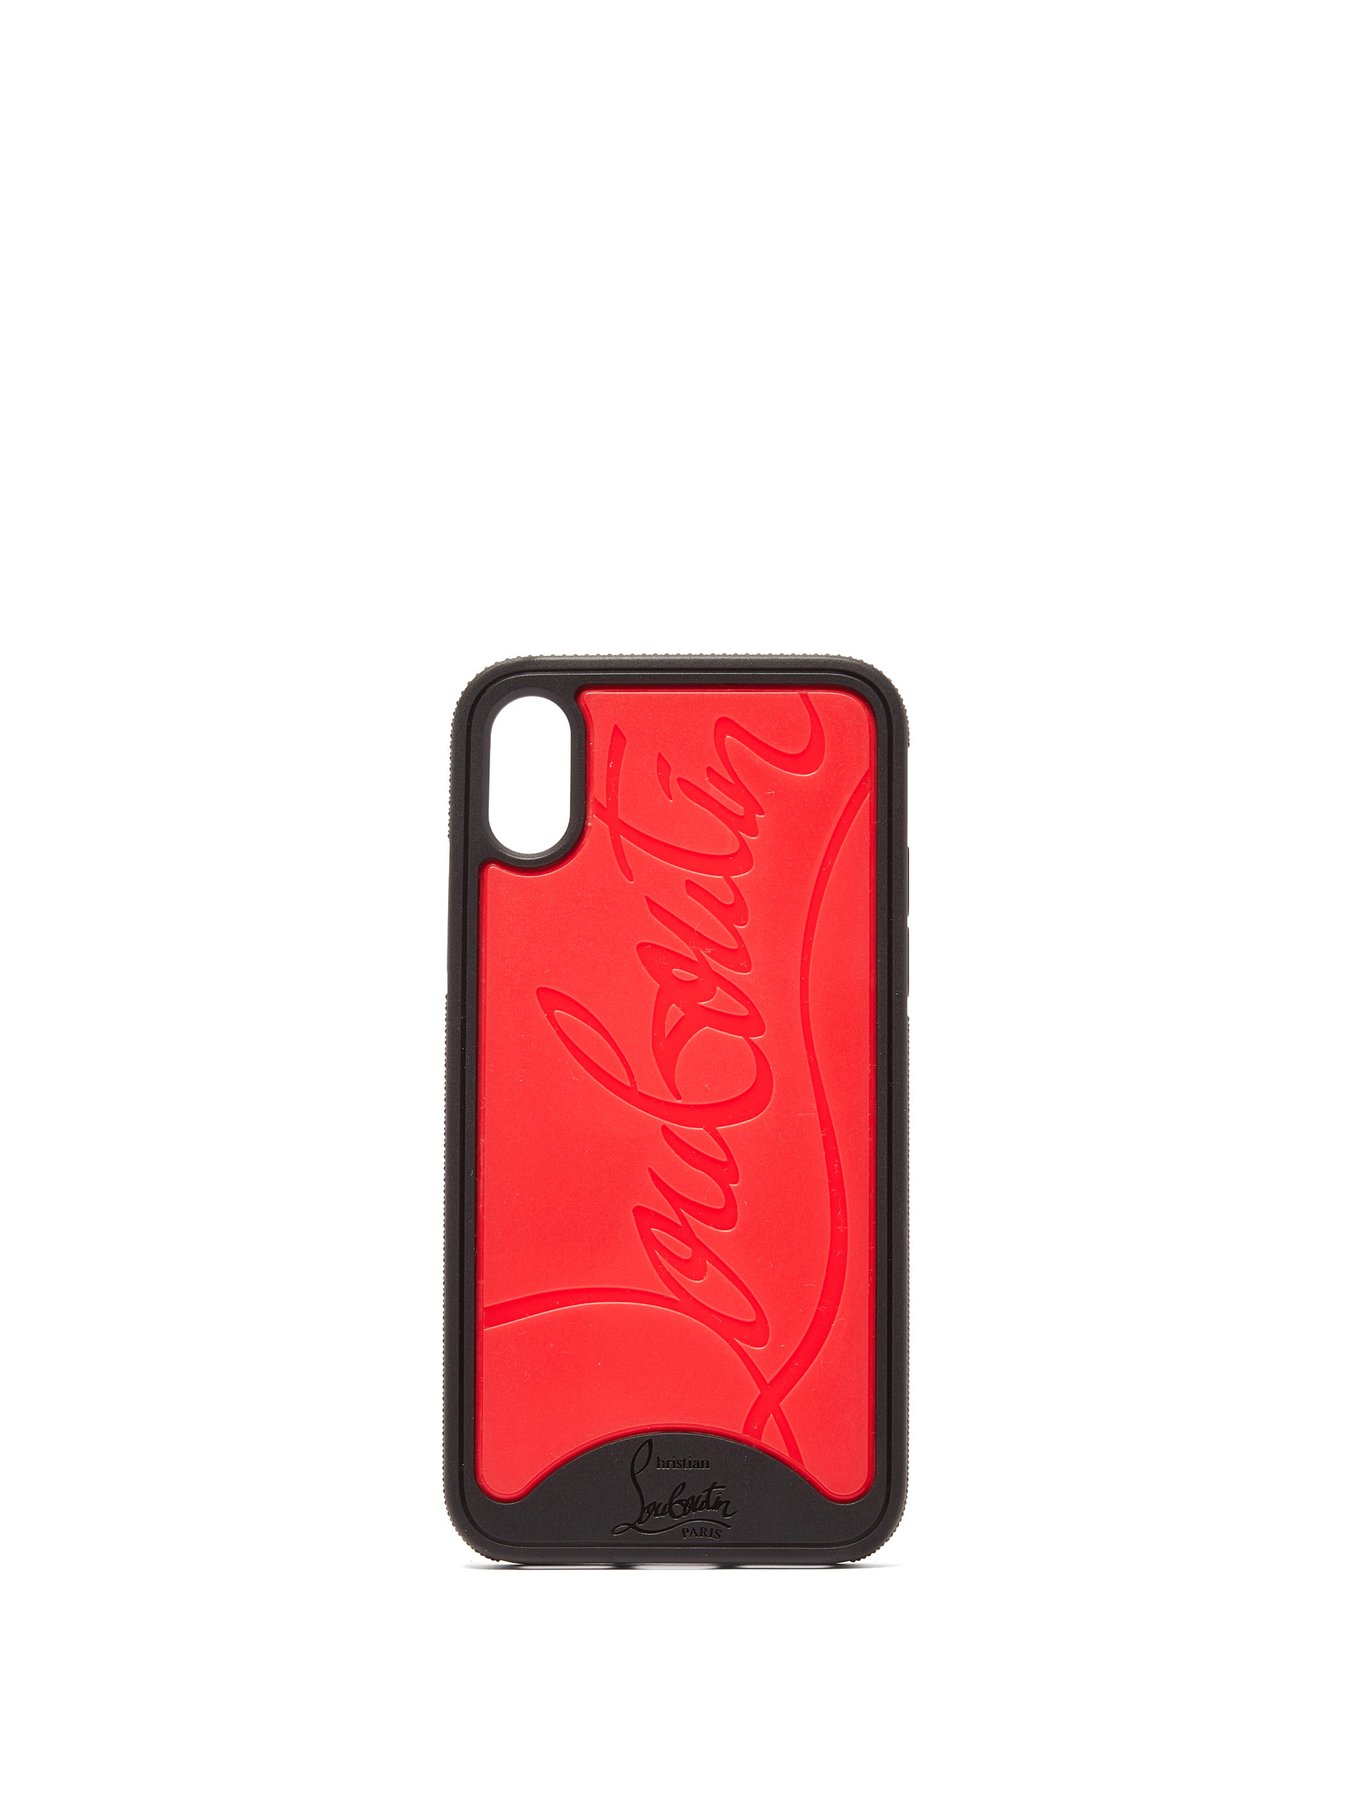 Loubiphone rubber iPhone® X/XS case | Christian Louboutin